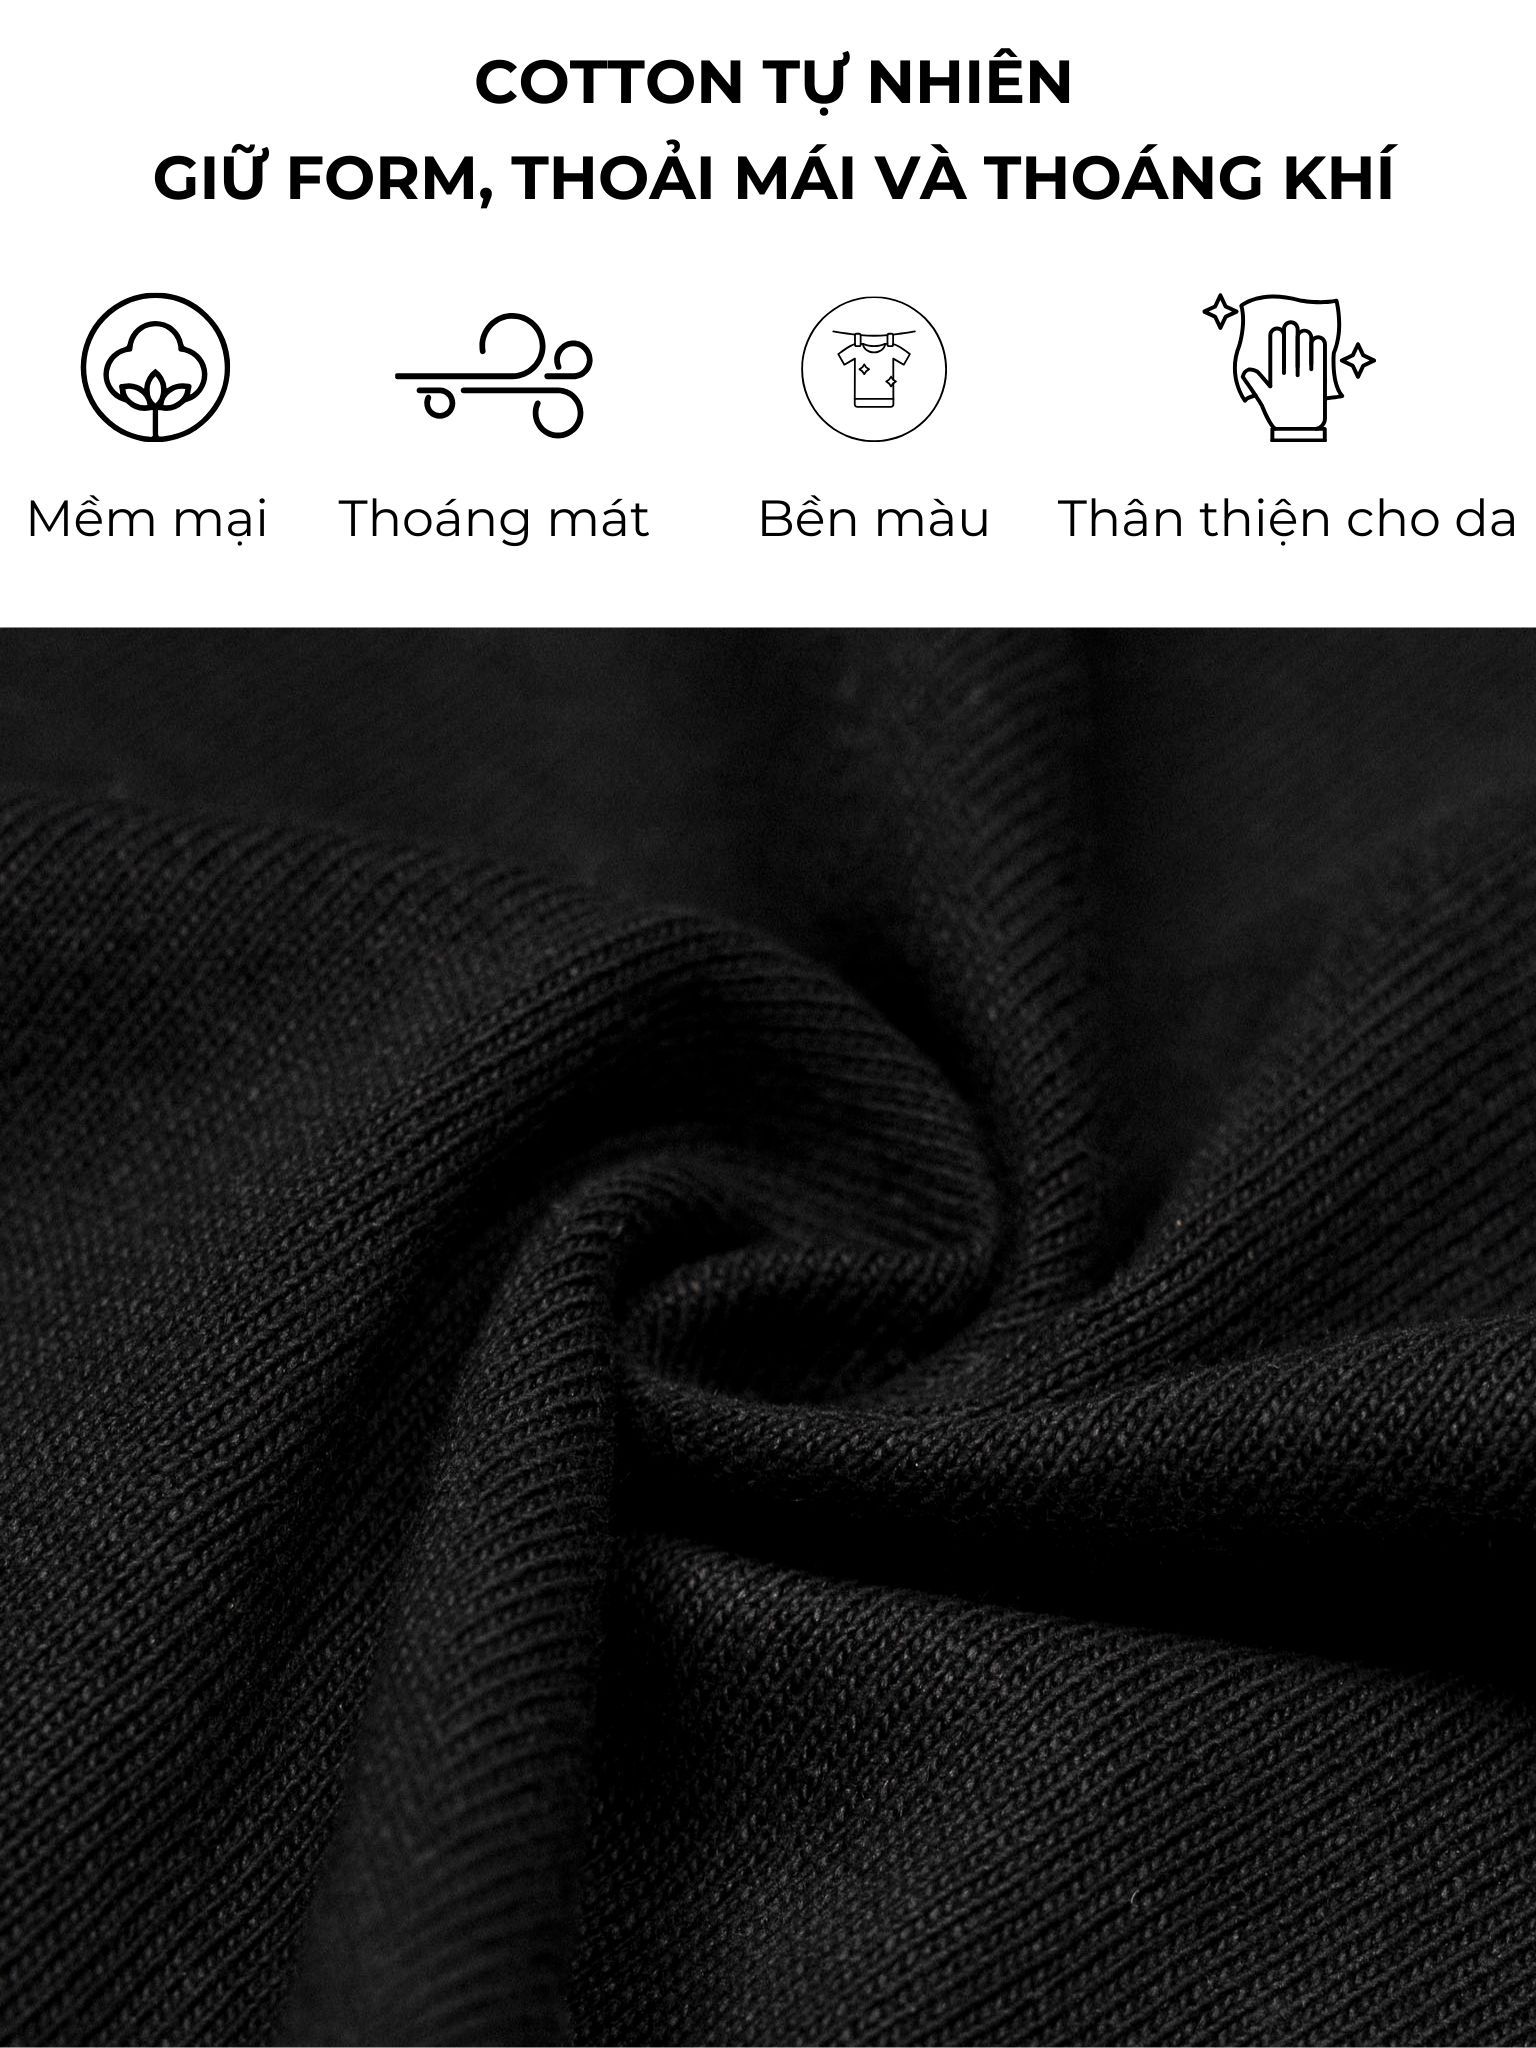 Ao-Thun-GUIDER-Local-Brand-Unisex-Oversize-Cotton-Nam-Nu